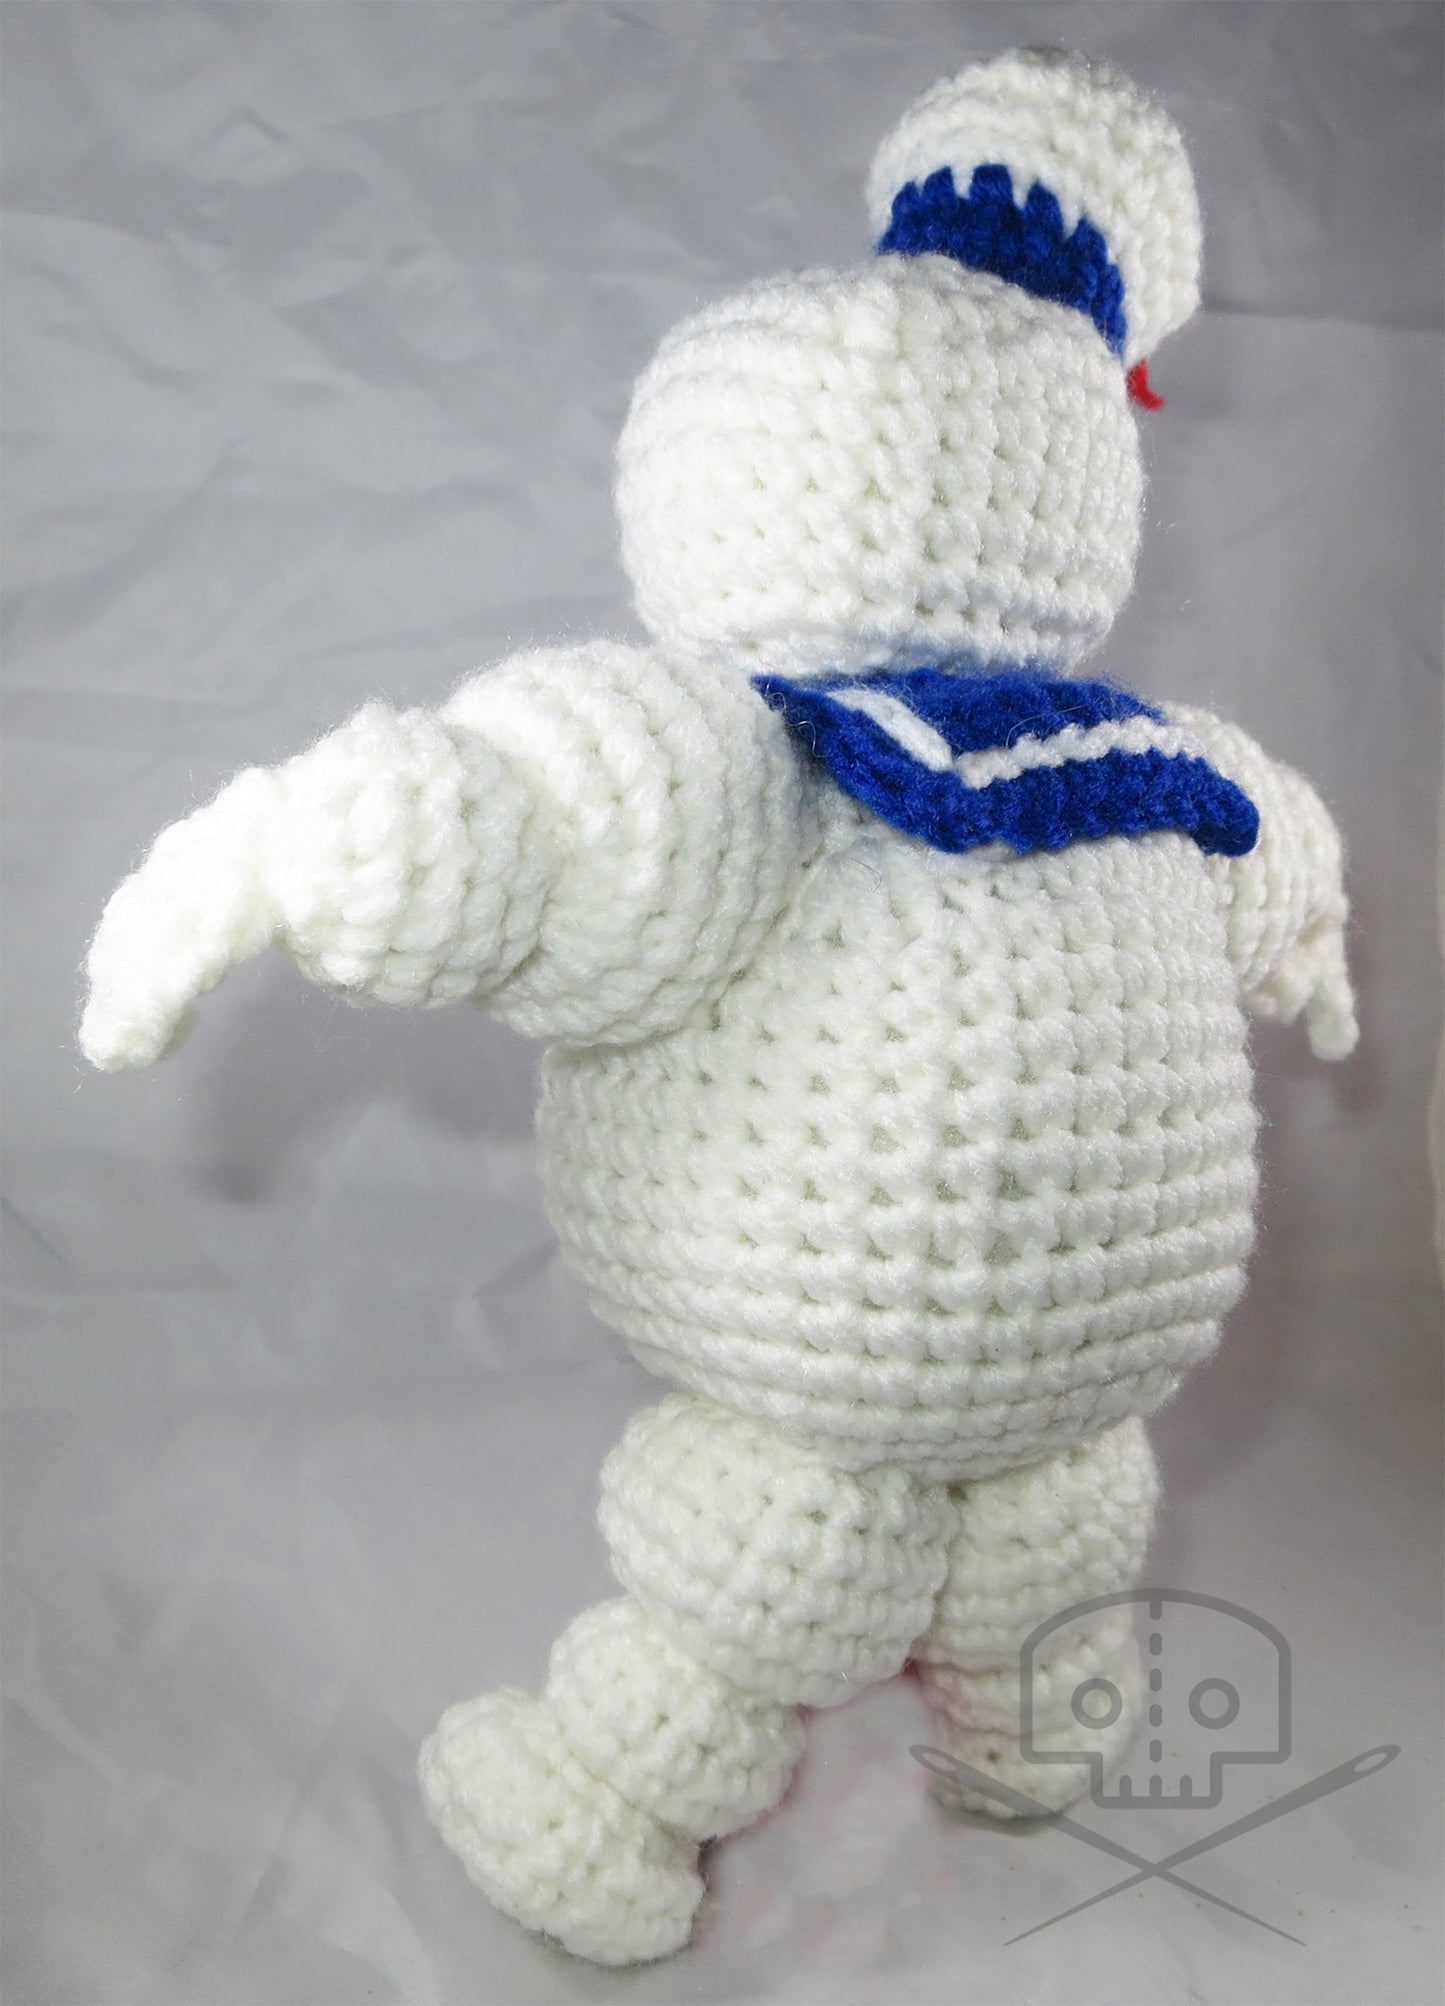 Ghostbusters-Inspired Marshmallow Man Plush